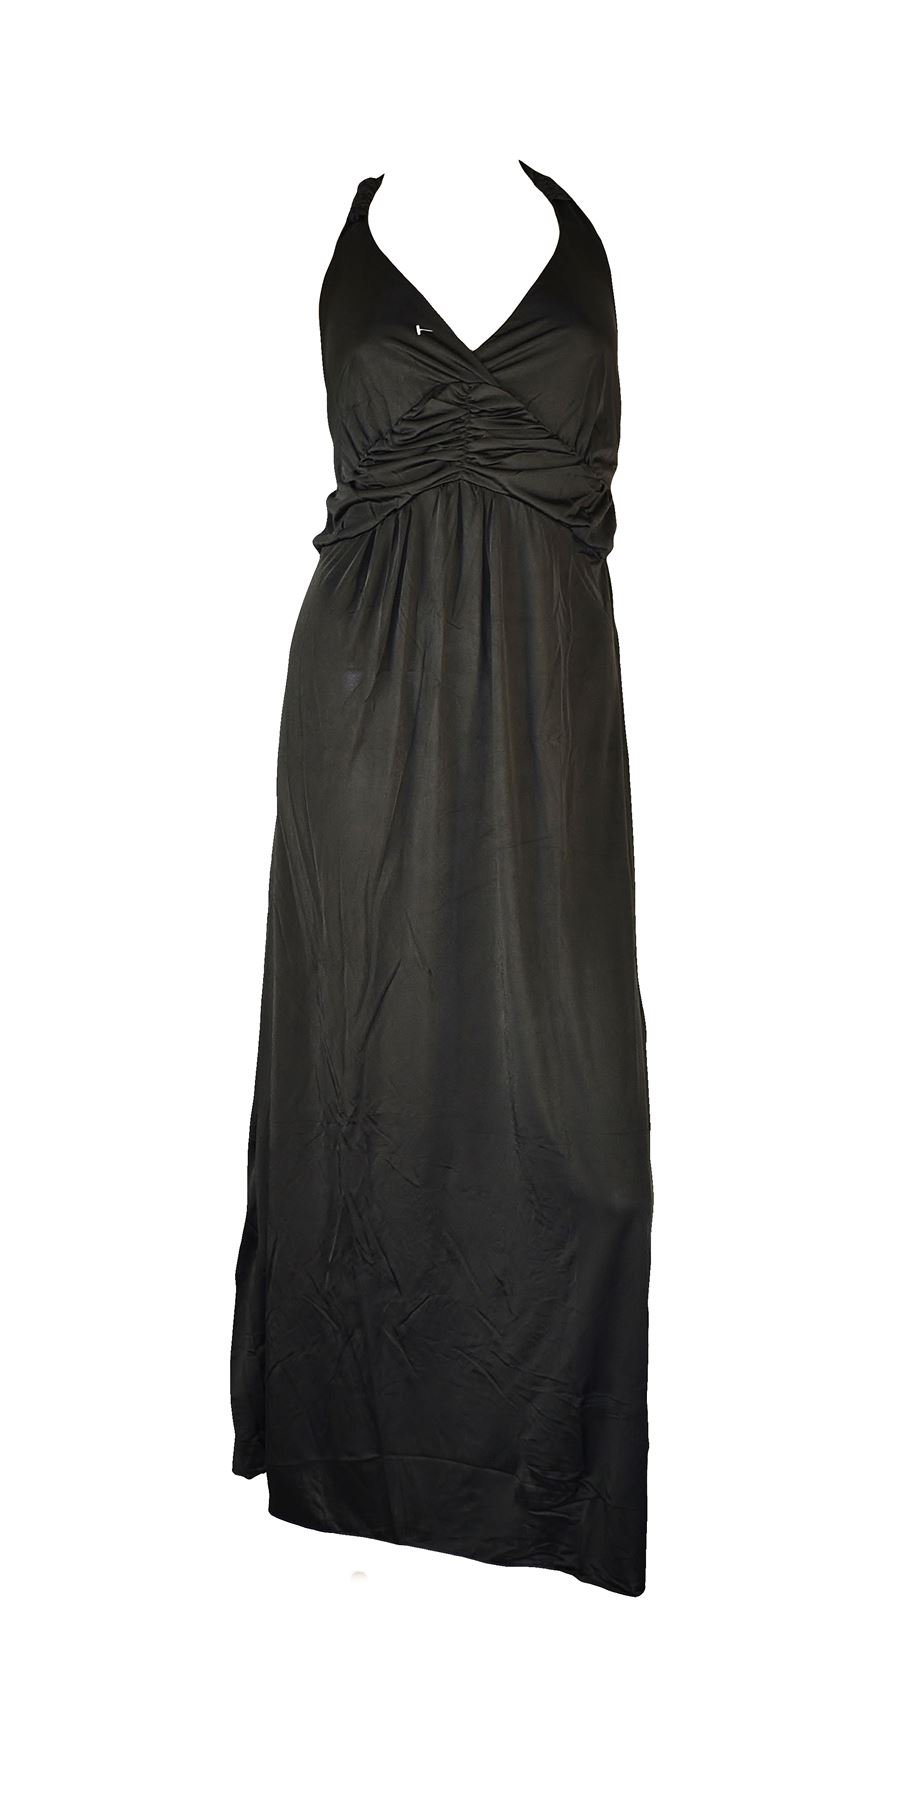 Belle Donne- Womenâ€s Maxi Dress Sleeveless Halter Top Solid Colors Long Dress - Black